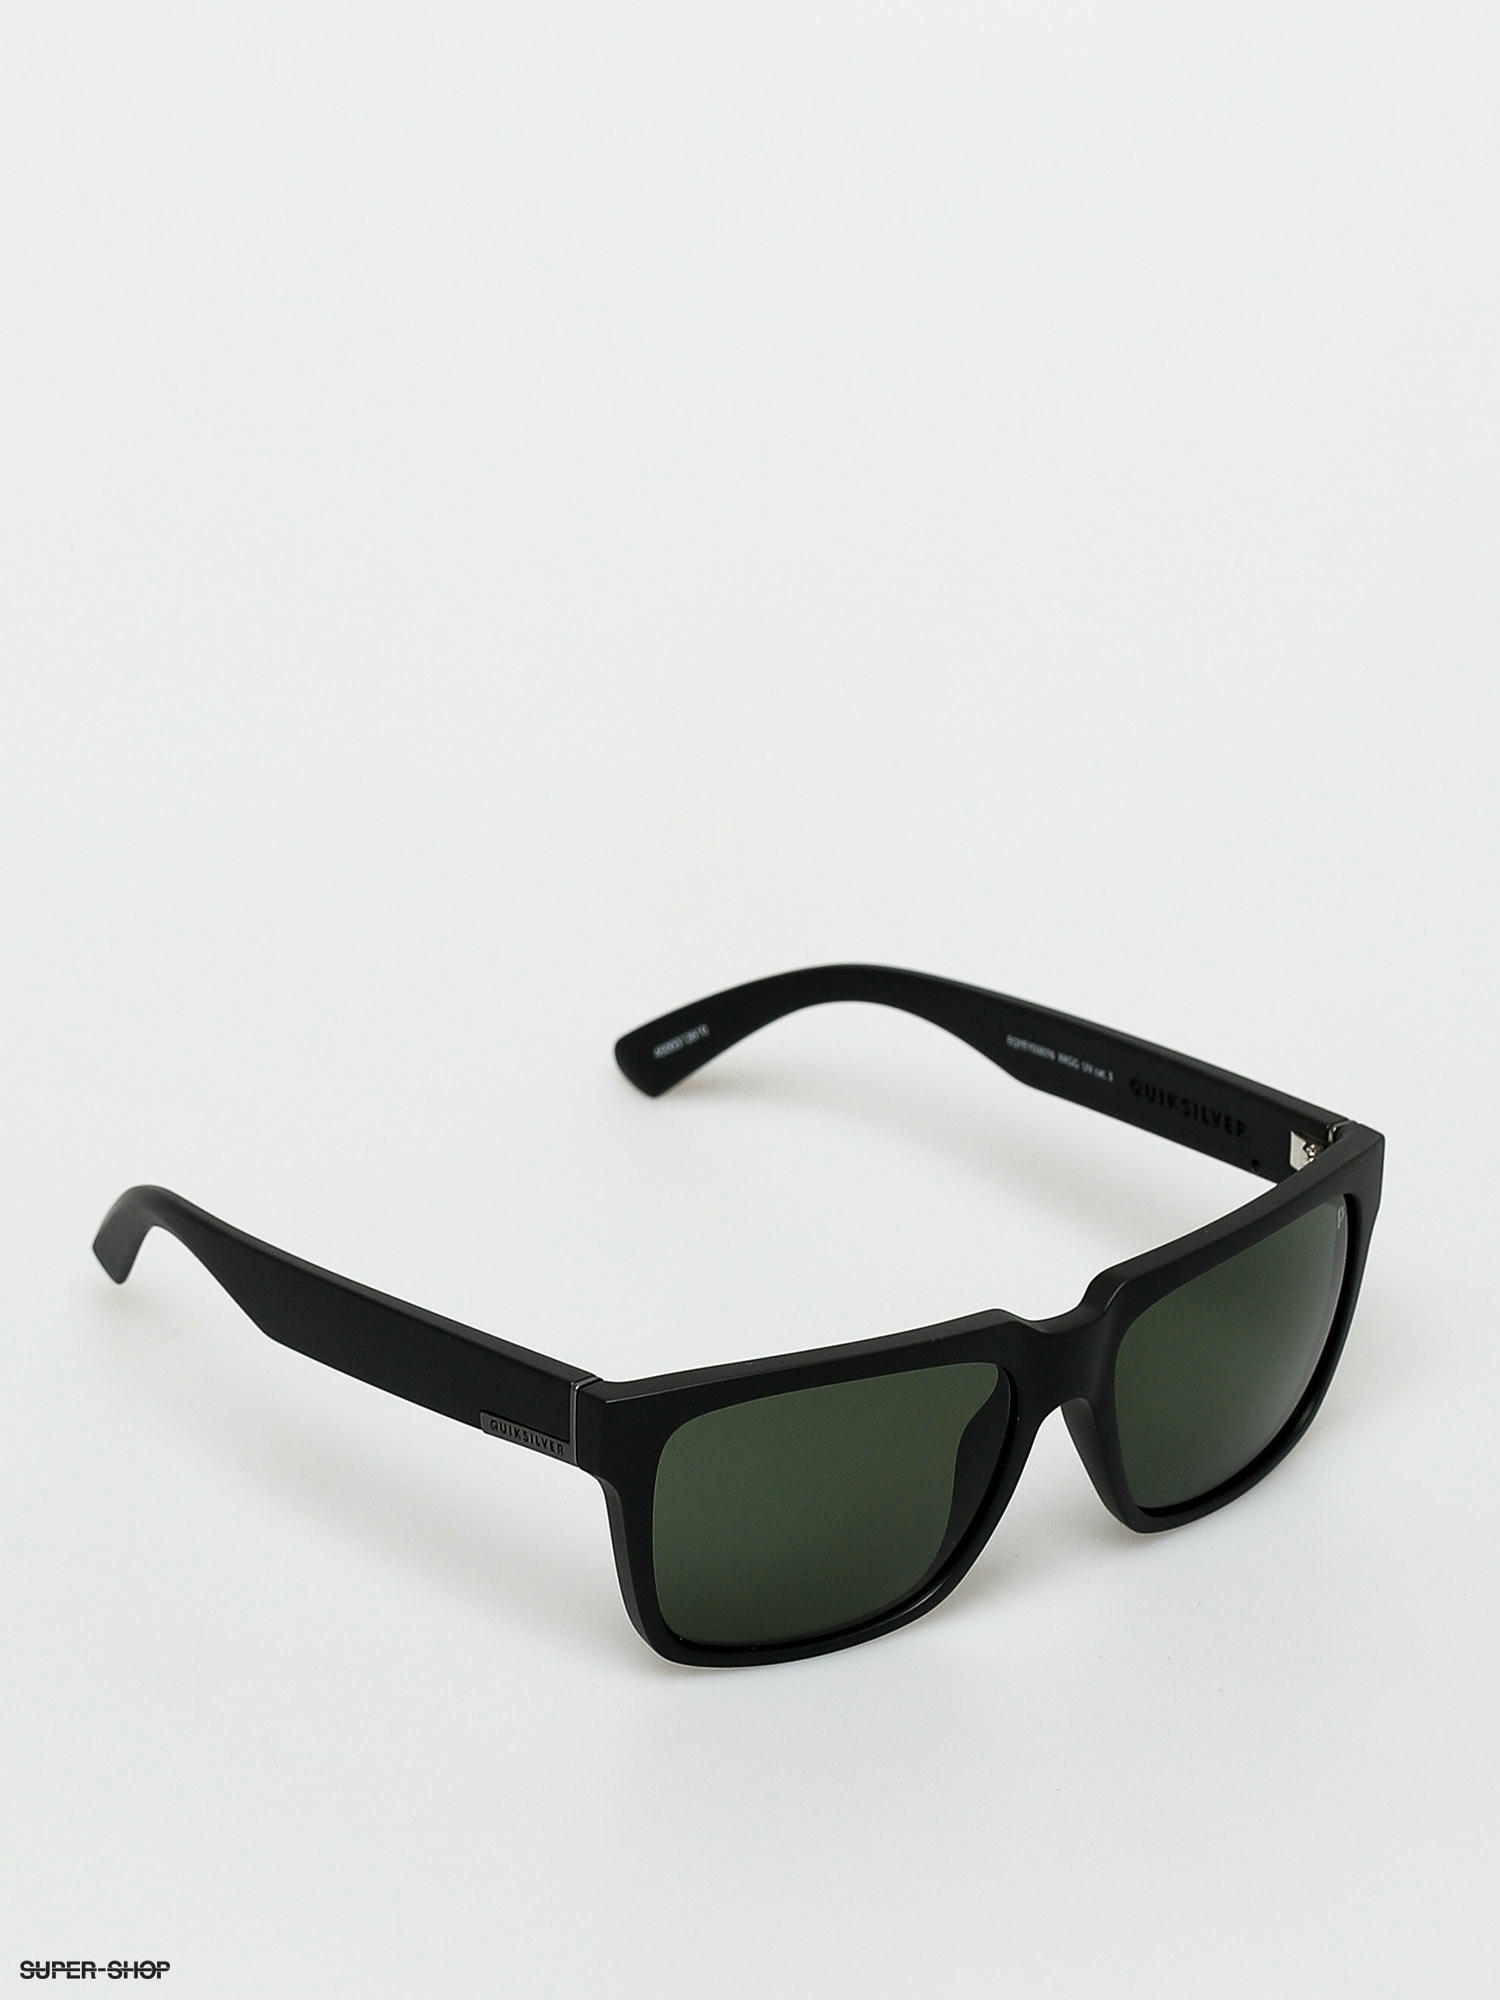 Quiksilver Bruiser Polarized Sunglasses (matte black/green p)